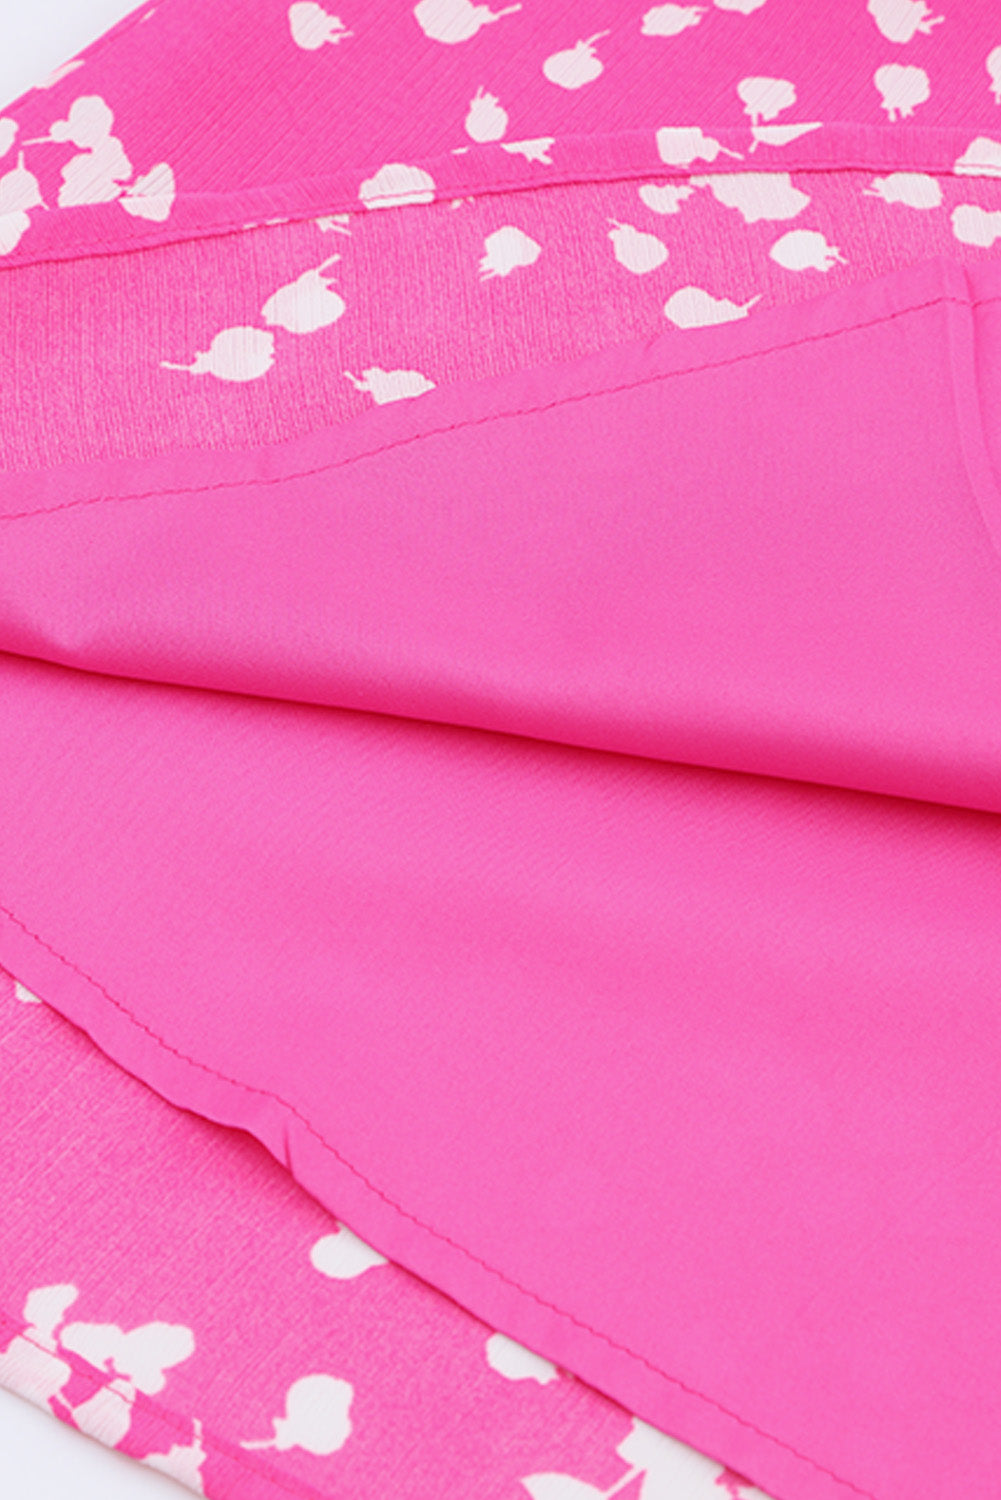 Rosafarbene, bedruckte, gekräuselte Bluse mit geschlitztem Ausschnitt